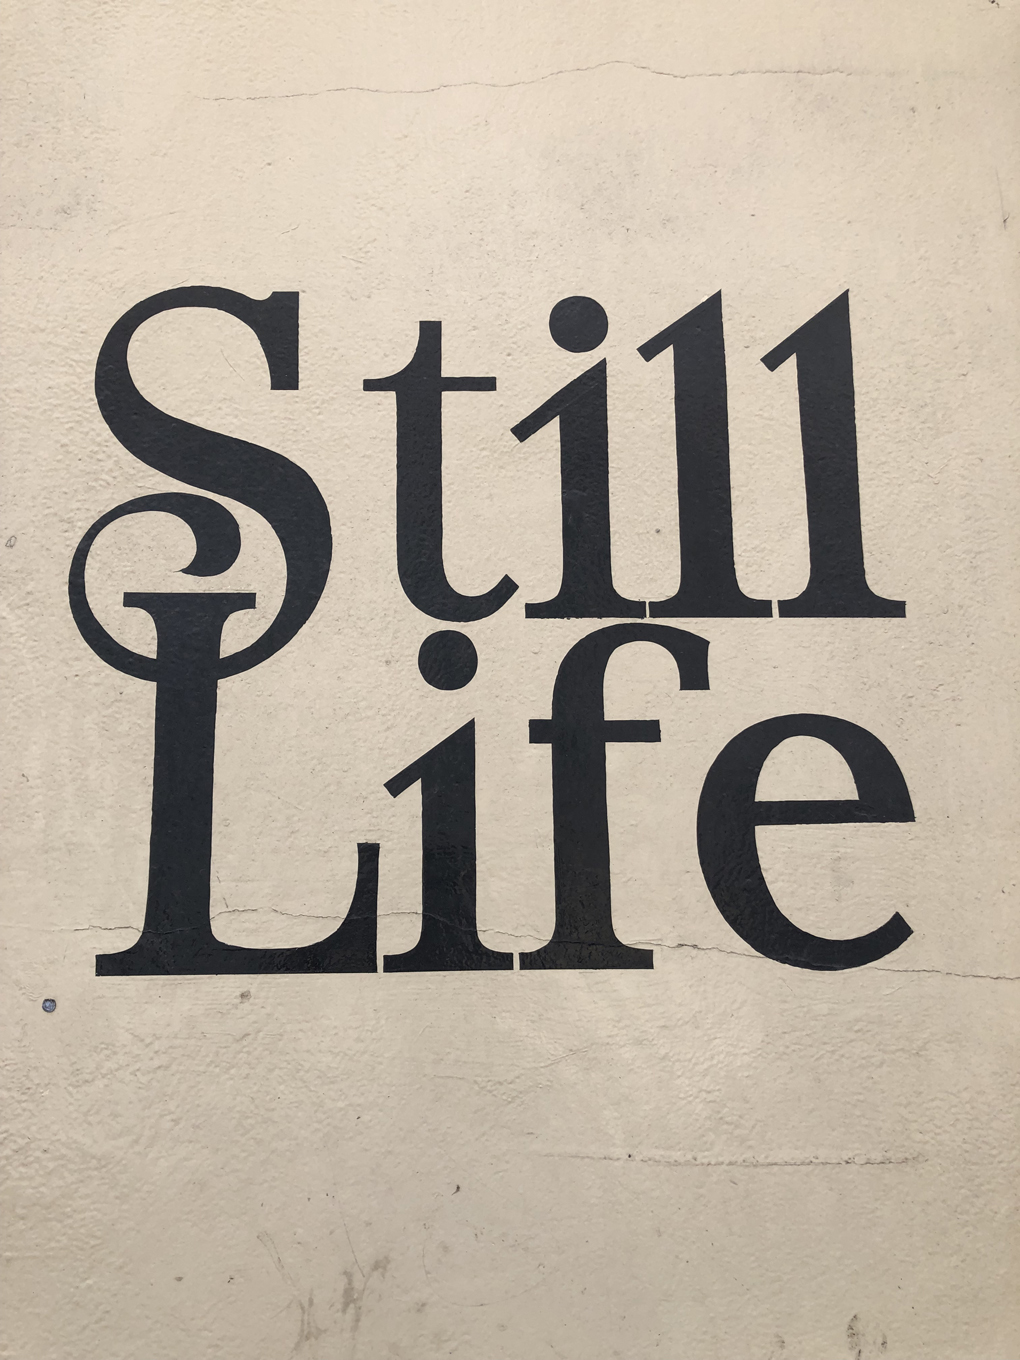 Elegant painted black letters spelling ‘Still life’